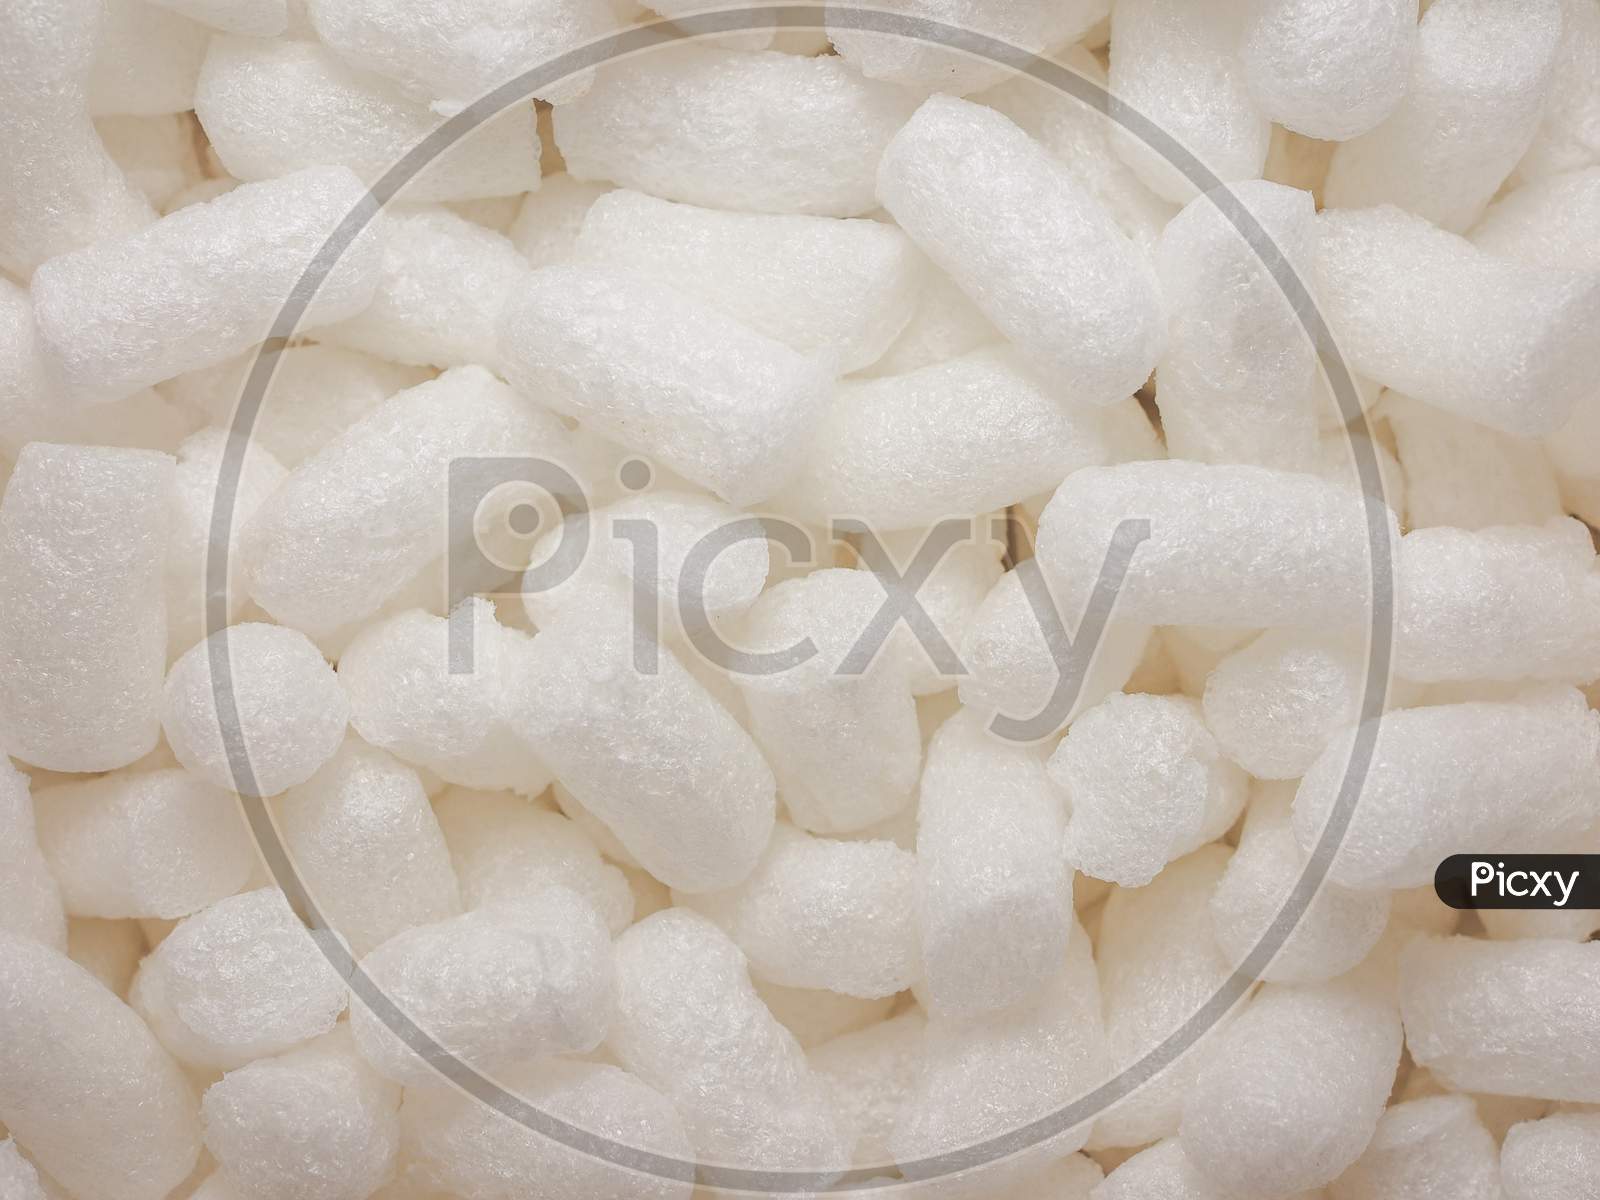 White Polystyrene Beads Background